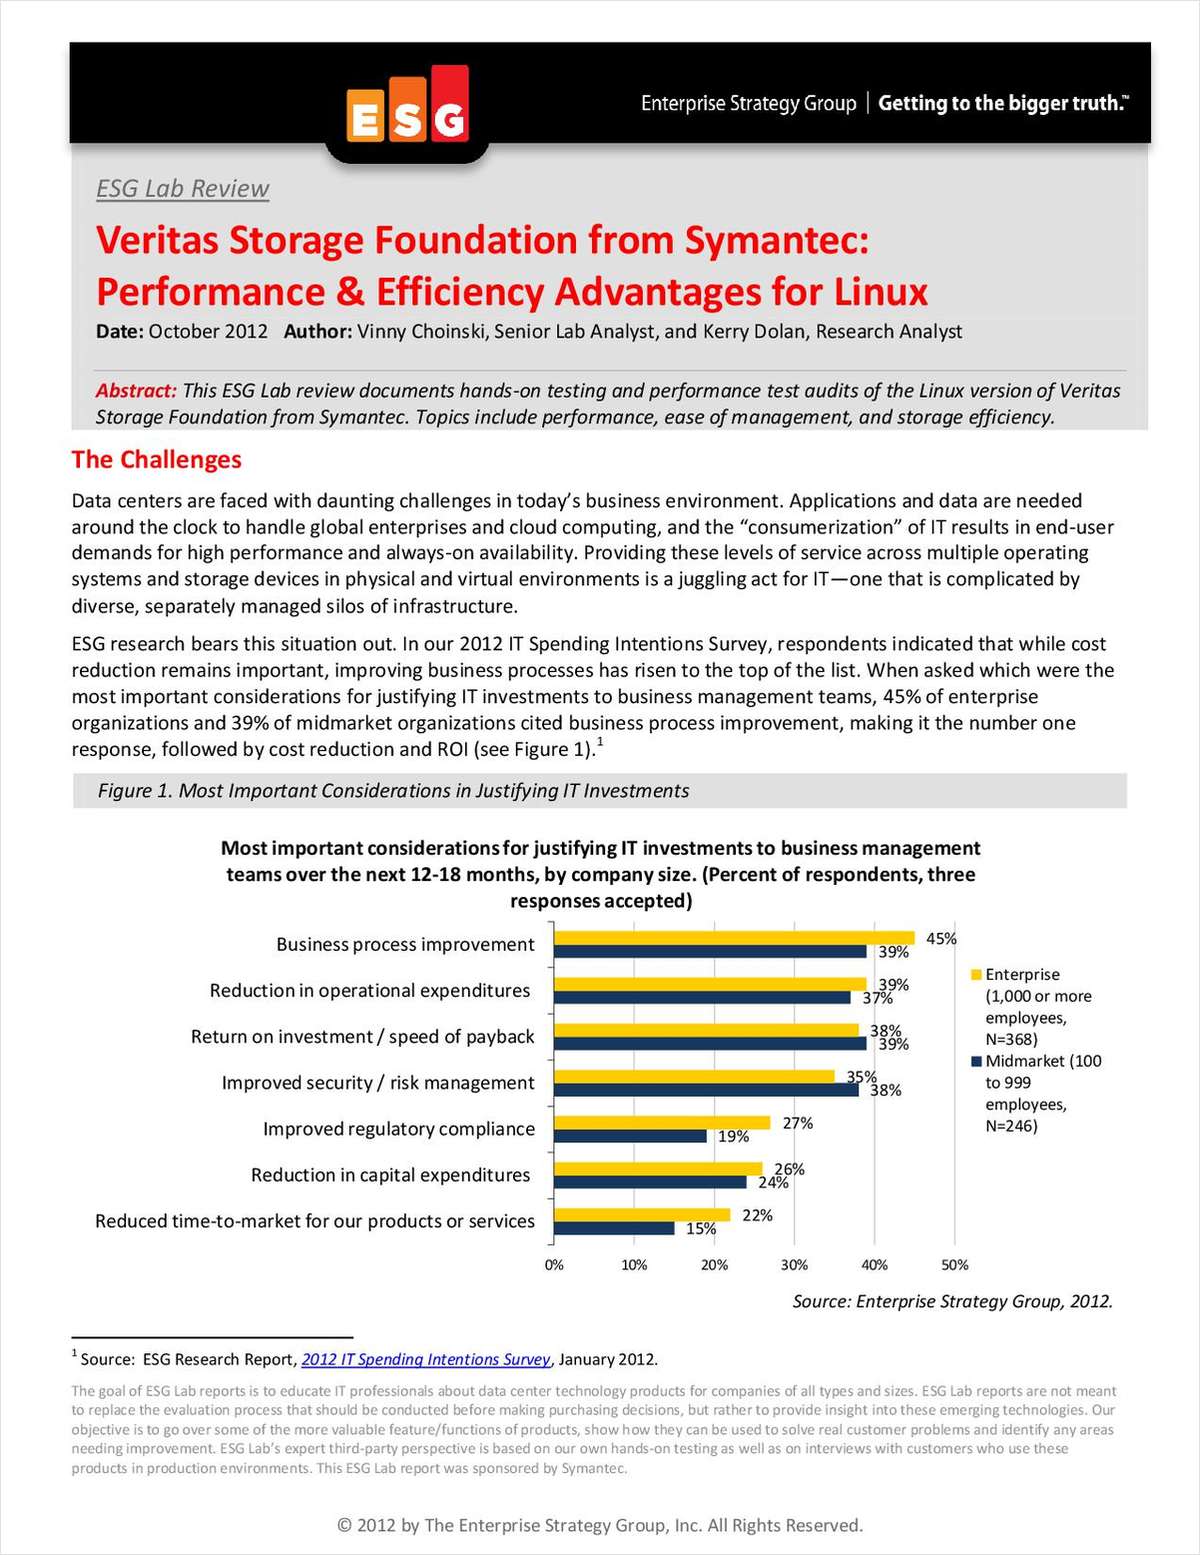 Veritas Storage Foundation from Symantec: Performance & Efficiency Advantages for Linux